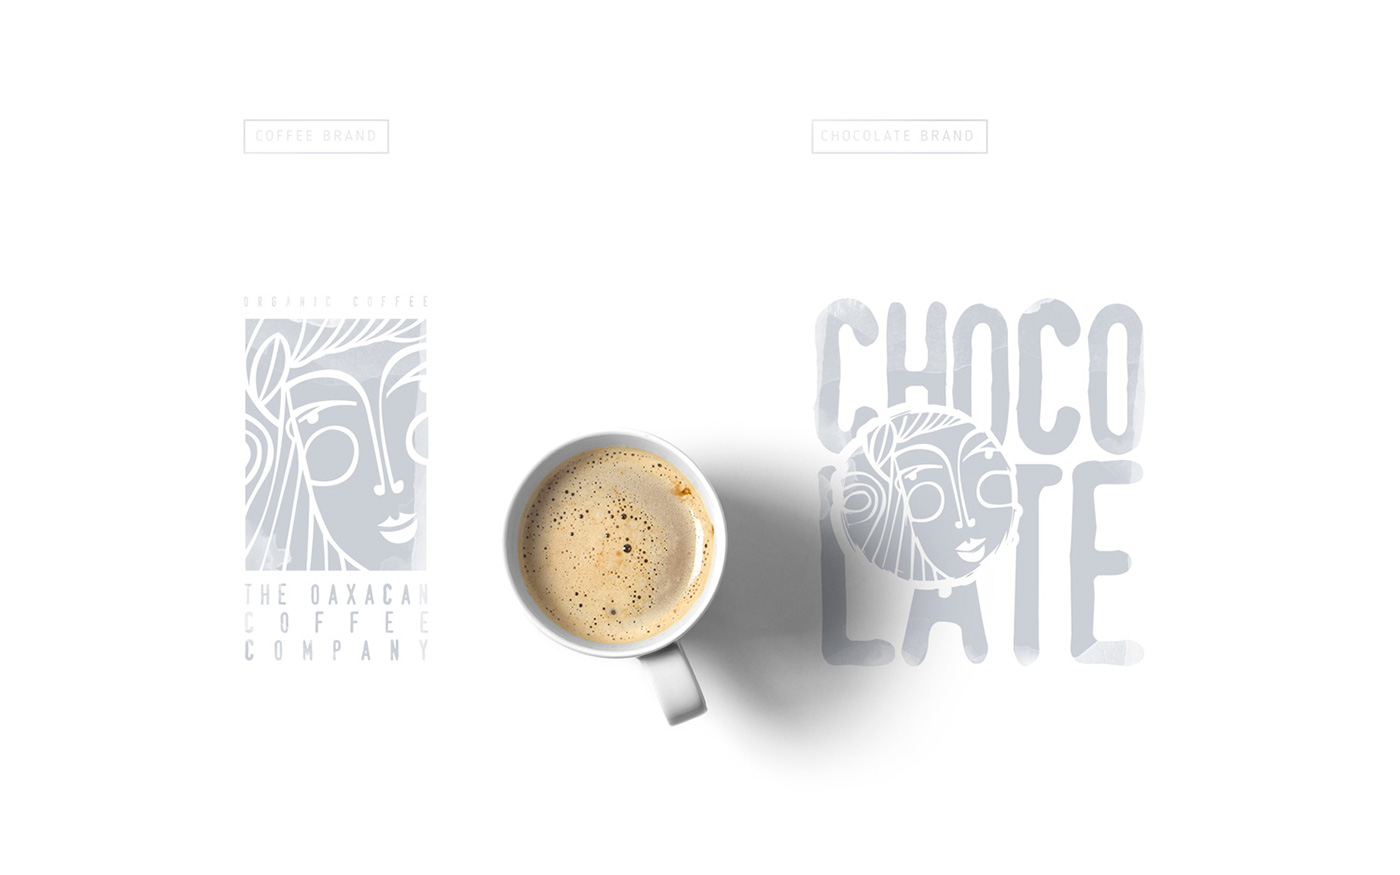 Coffee brand chocolate design Stuff oaxaca tocc the oaxacan coffee company latte nacho huizar